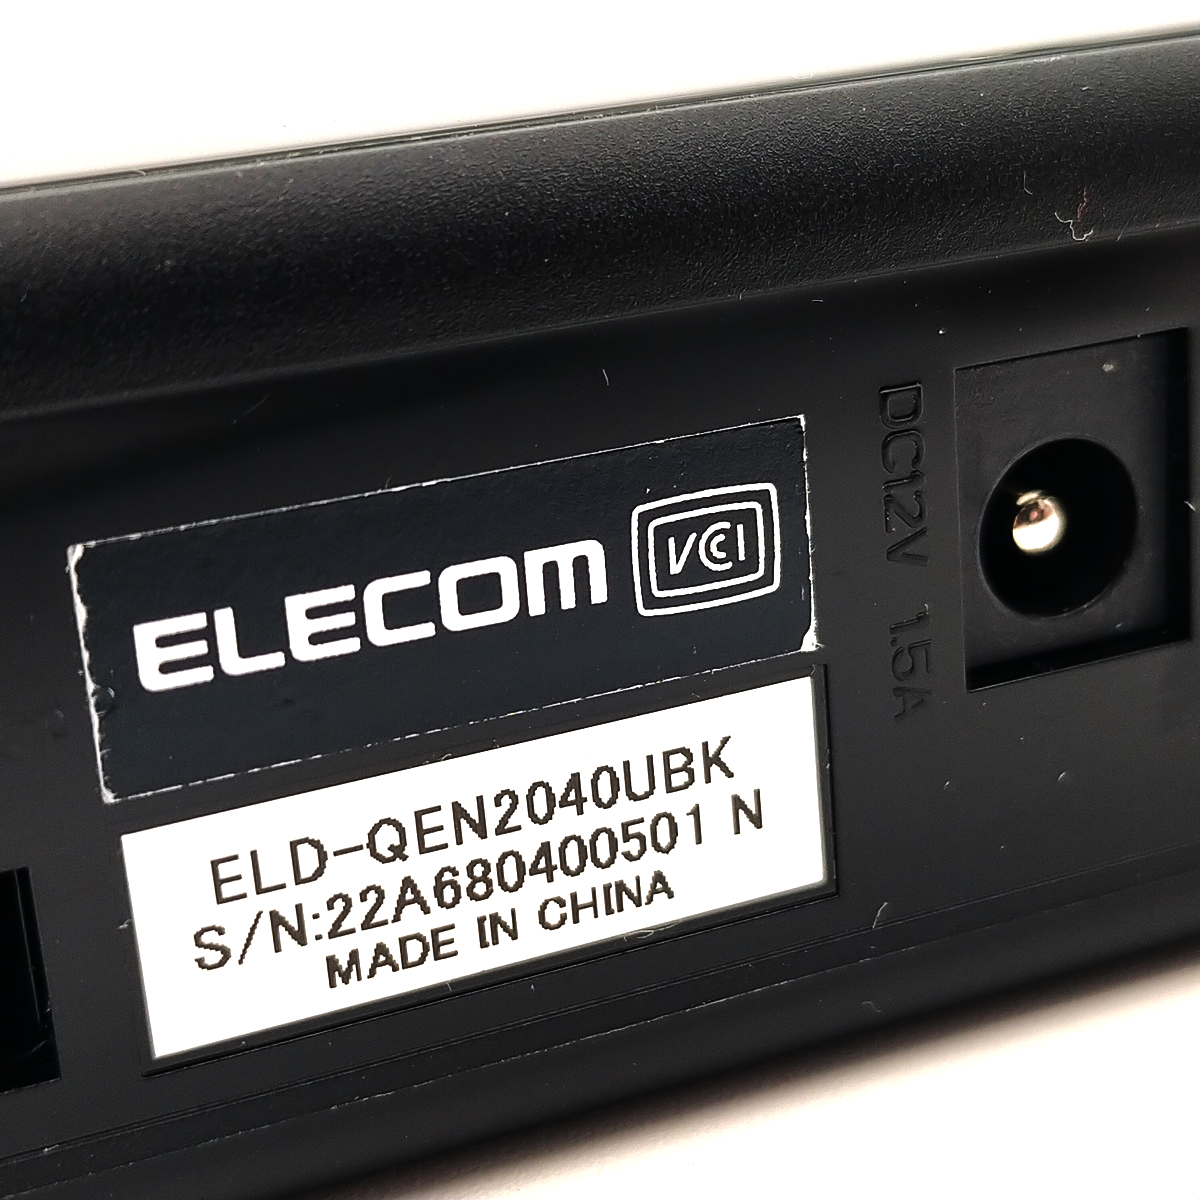 S10014 外付けHDD ハードディスク USB接続 4TB ELECOM / WD ELD-QEN2040UBK / WD40EARX 5400RPM 手渡し歓迎!! 札幌発_画像4